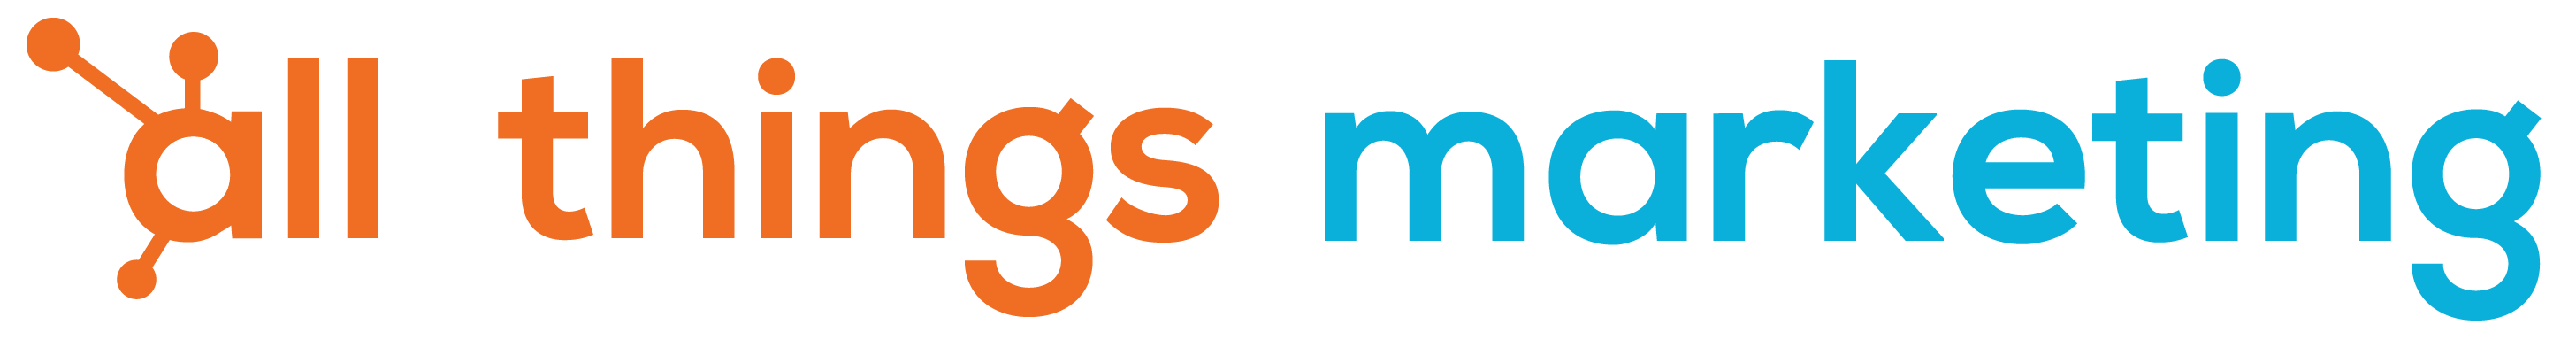 logo-ATM-v1-wide